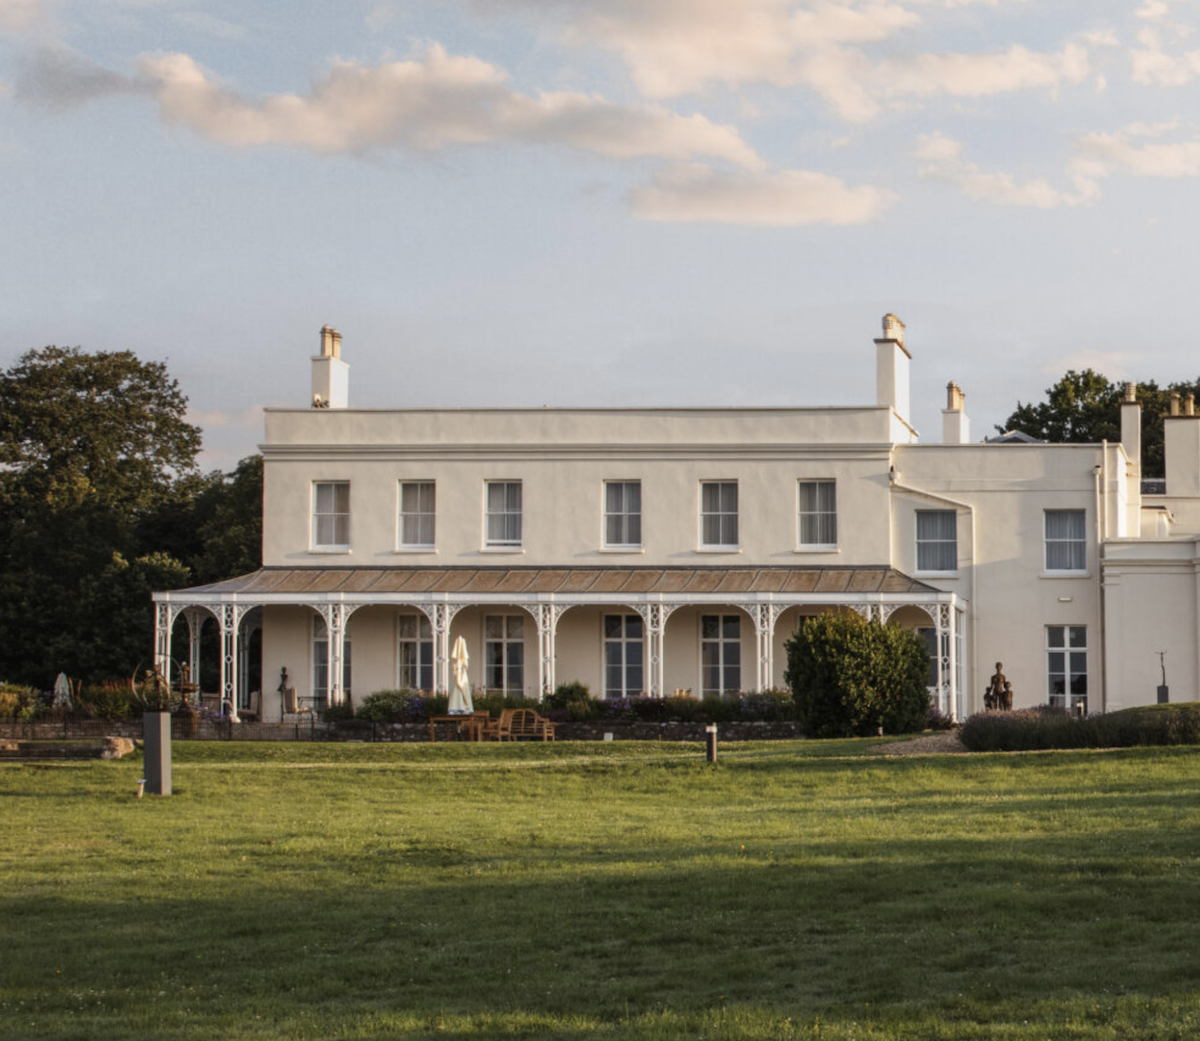 Lympstone Manor